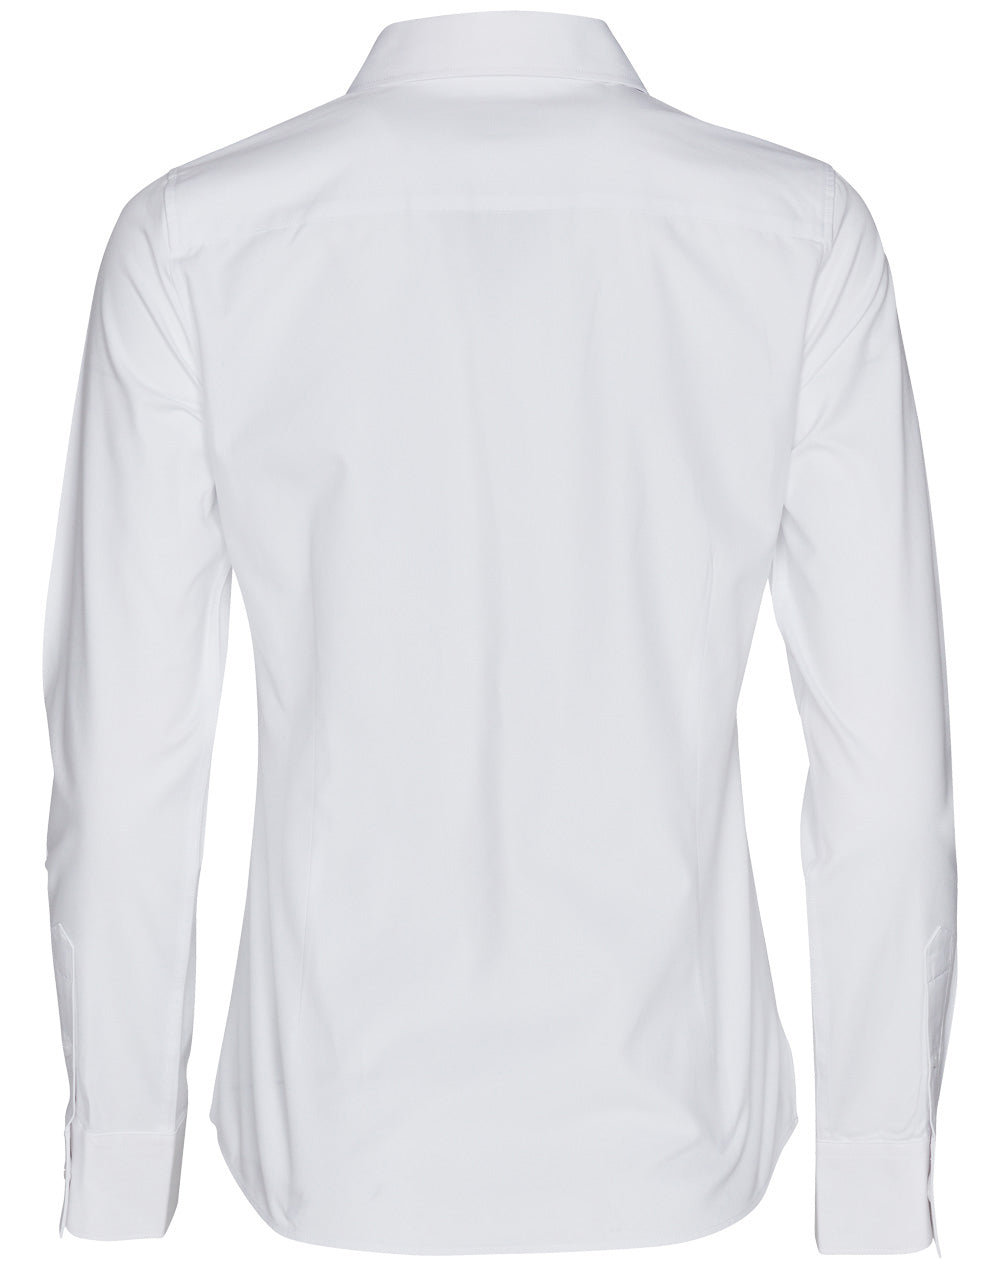 Benchmark M8040L Women's CVC Oxford Long Sleeve Shirt